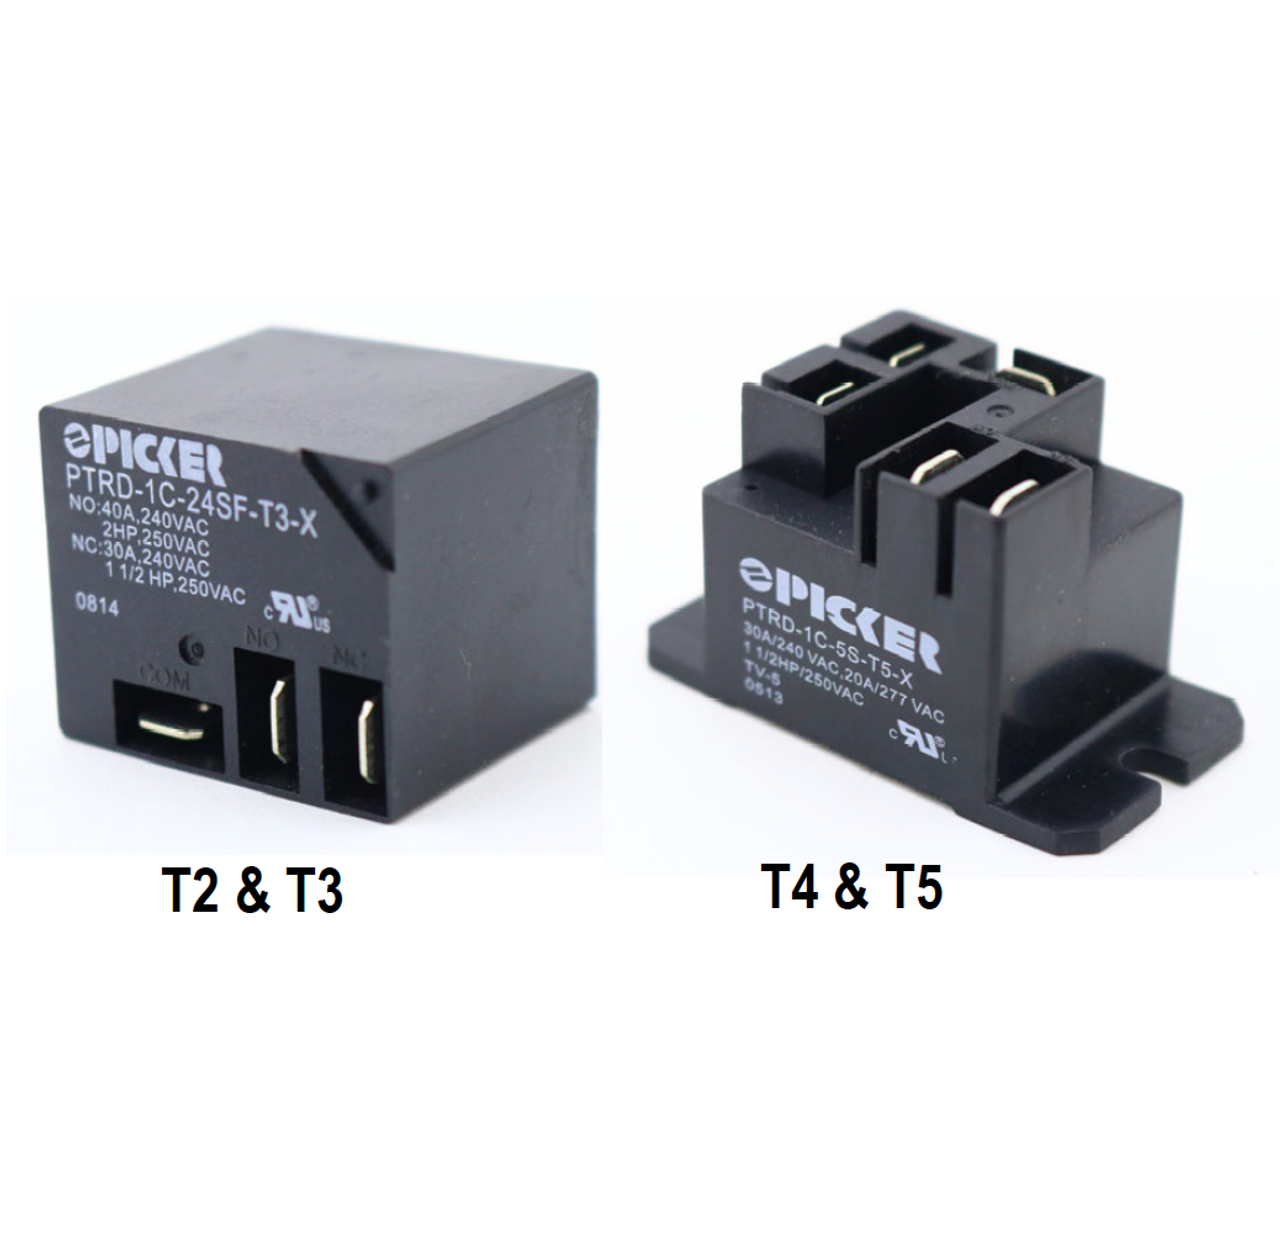 Picker PTRD-1C-110ST-T3-X Power Relays